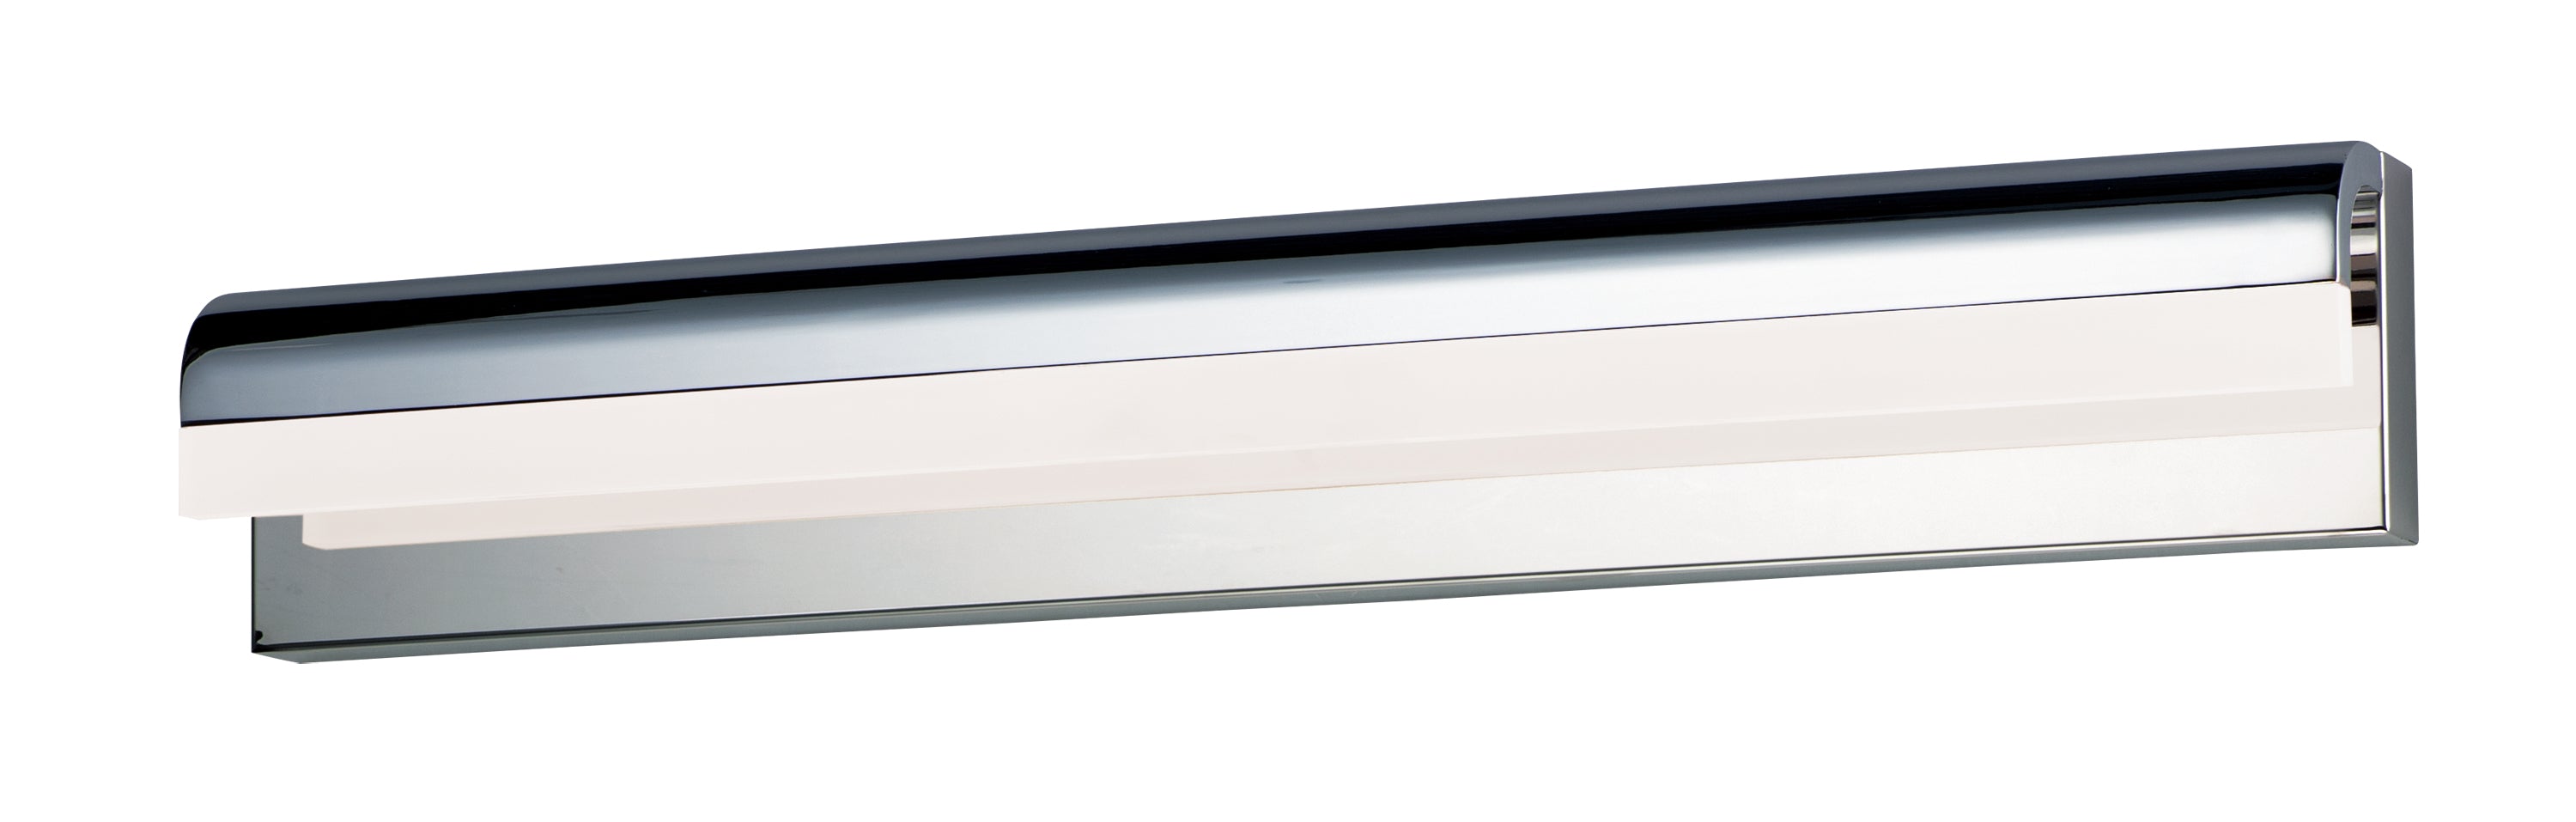 WATERFALL Bathroom sconce Chrome INTEGRATED LED - E24846-90PC | MAXIM/ET2